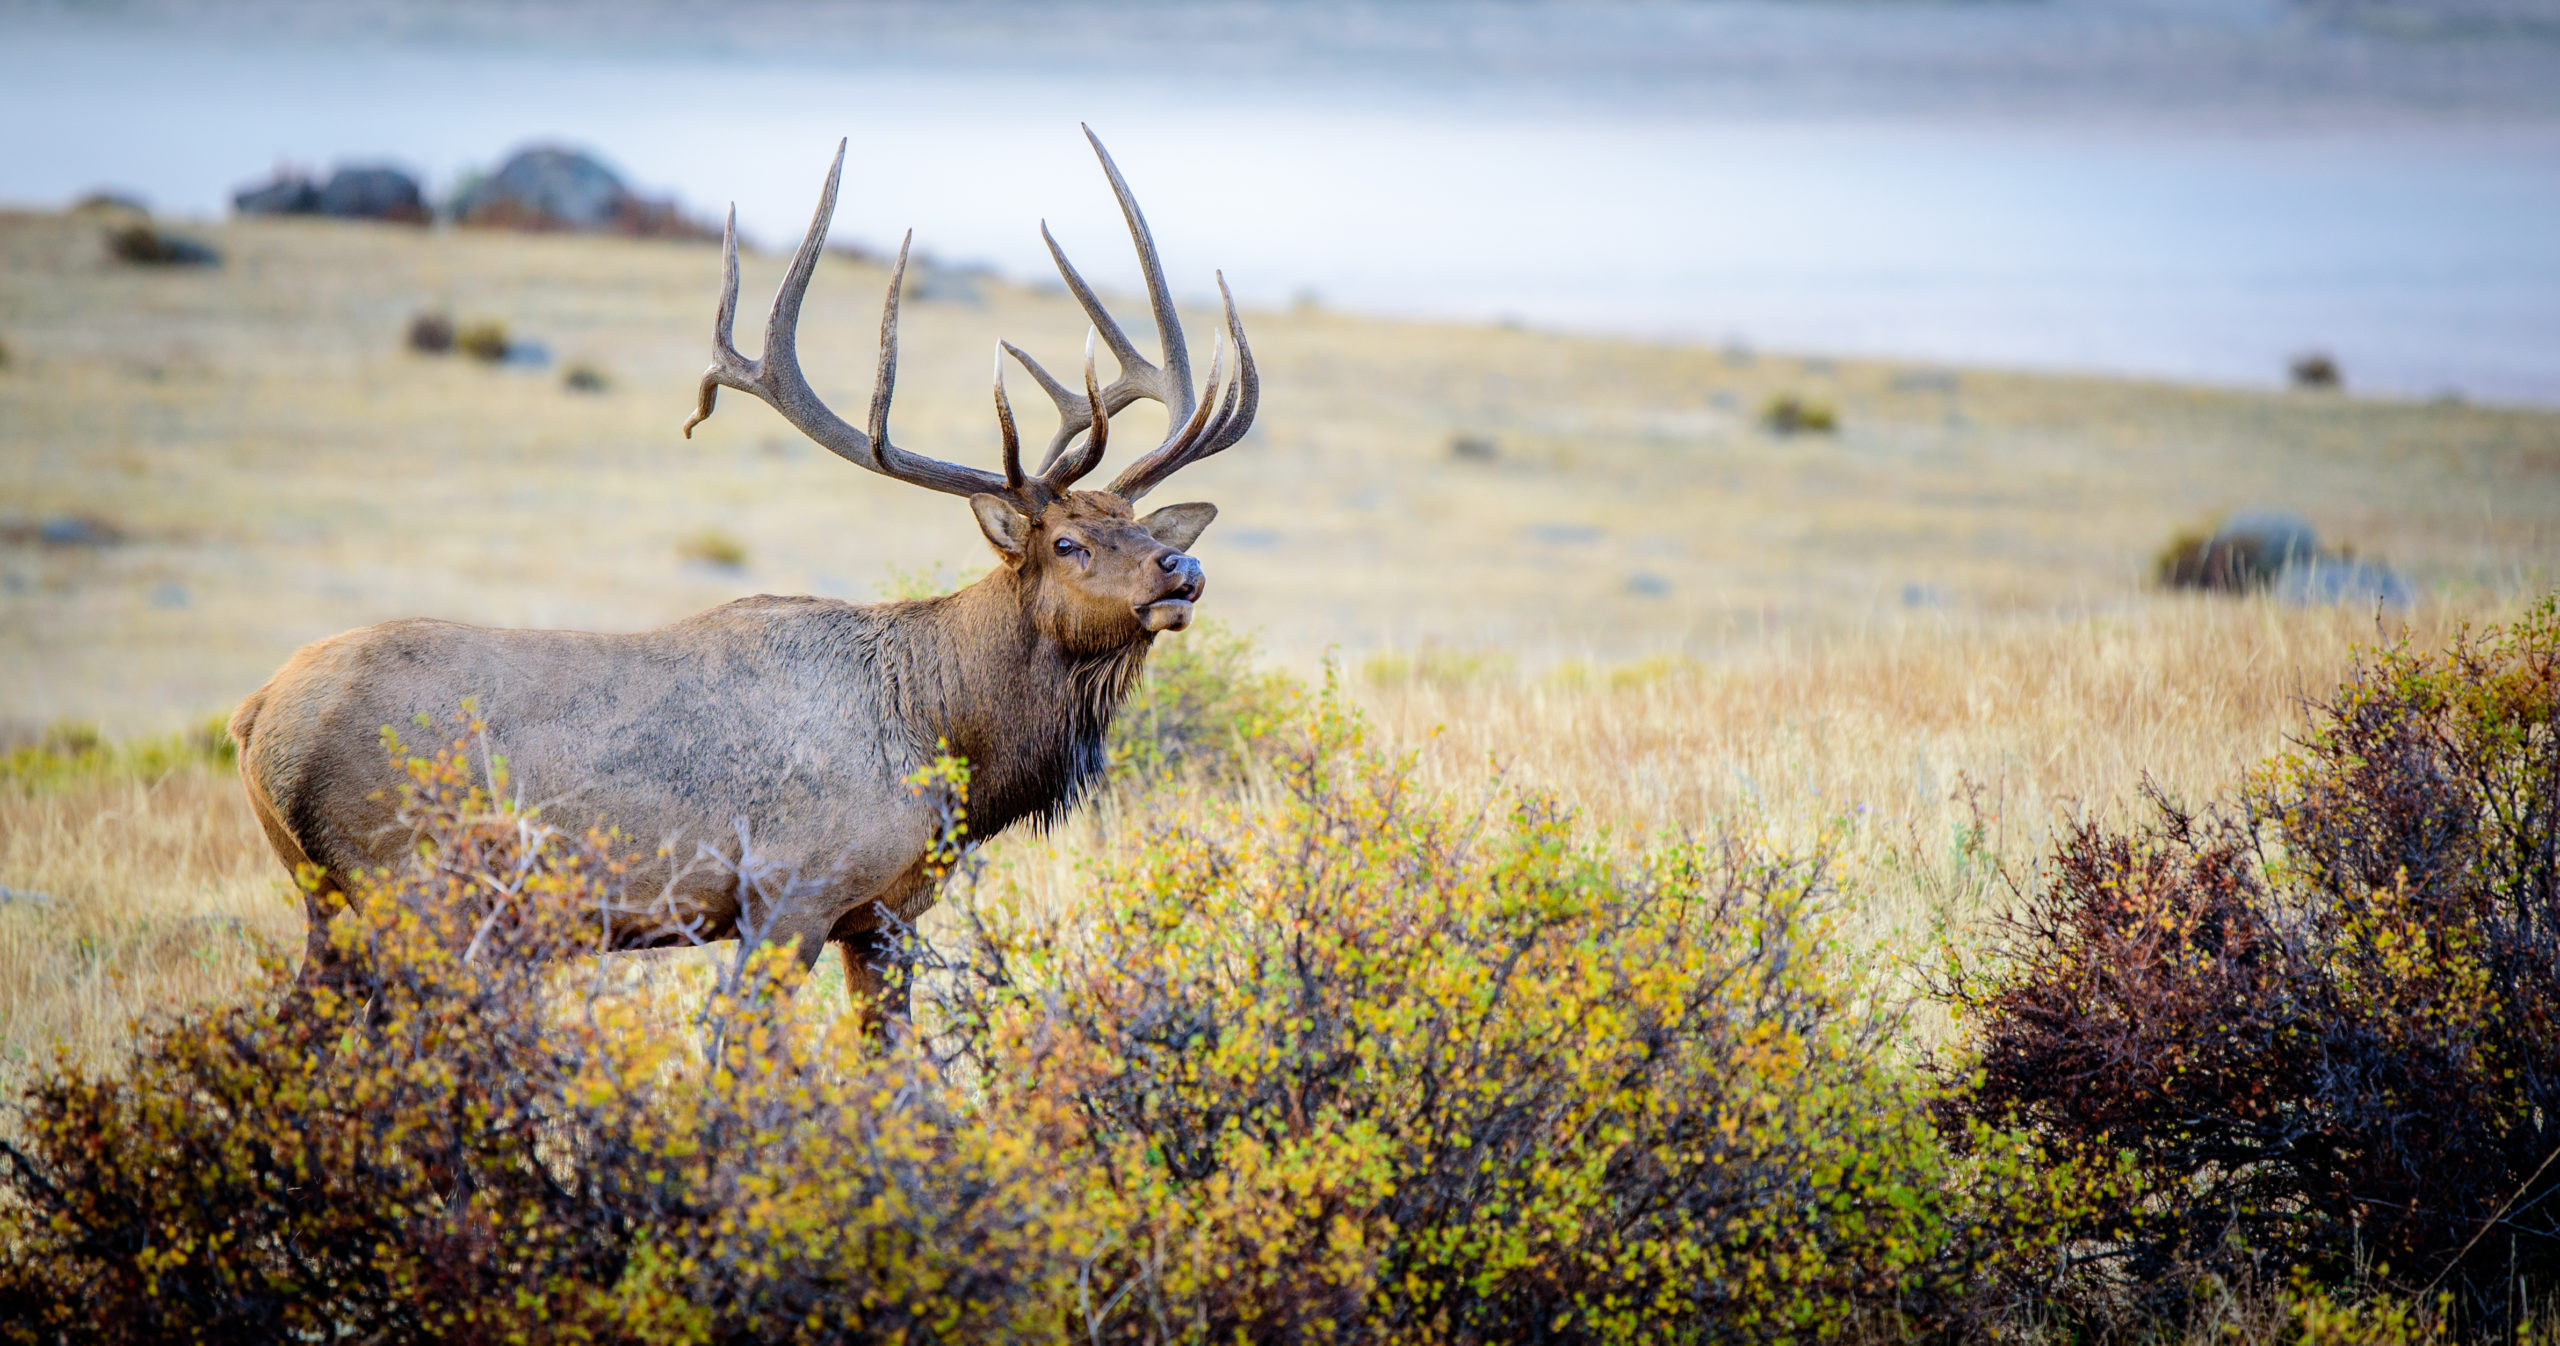 Habitat Stamp Project funding requests range from riparian restoration to protecting elk habitat